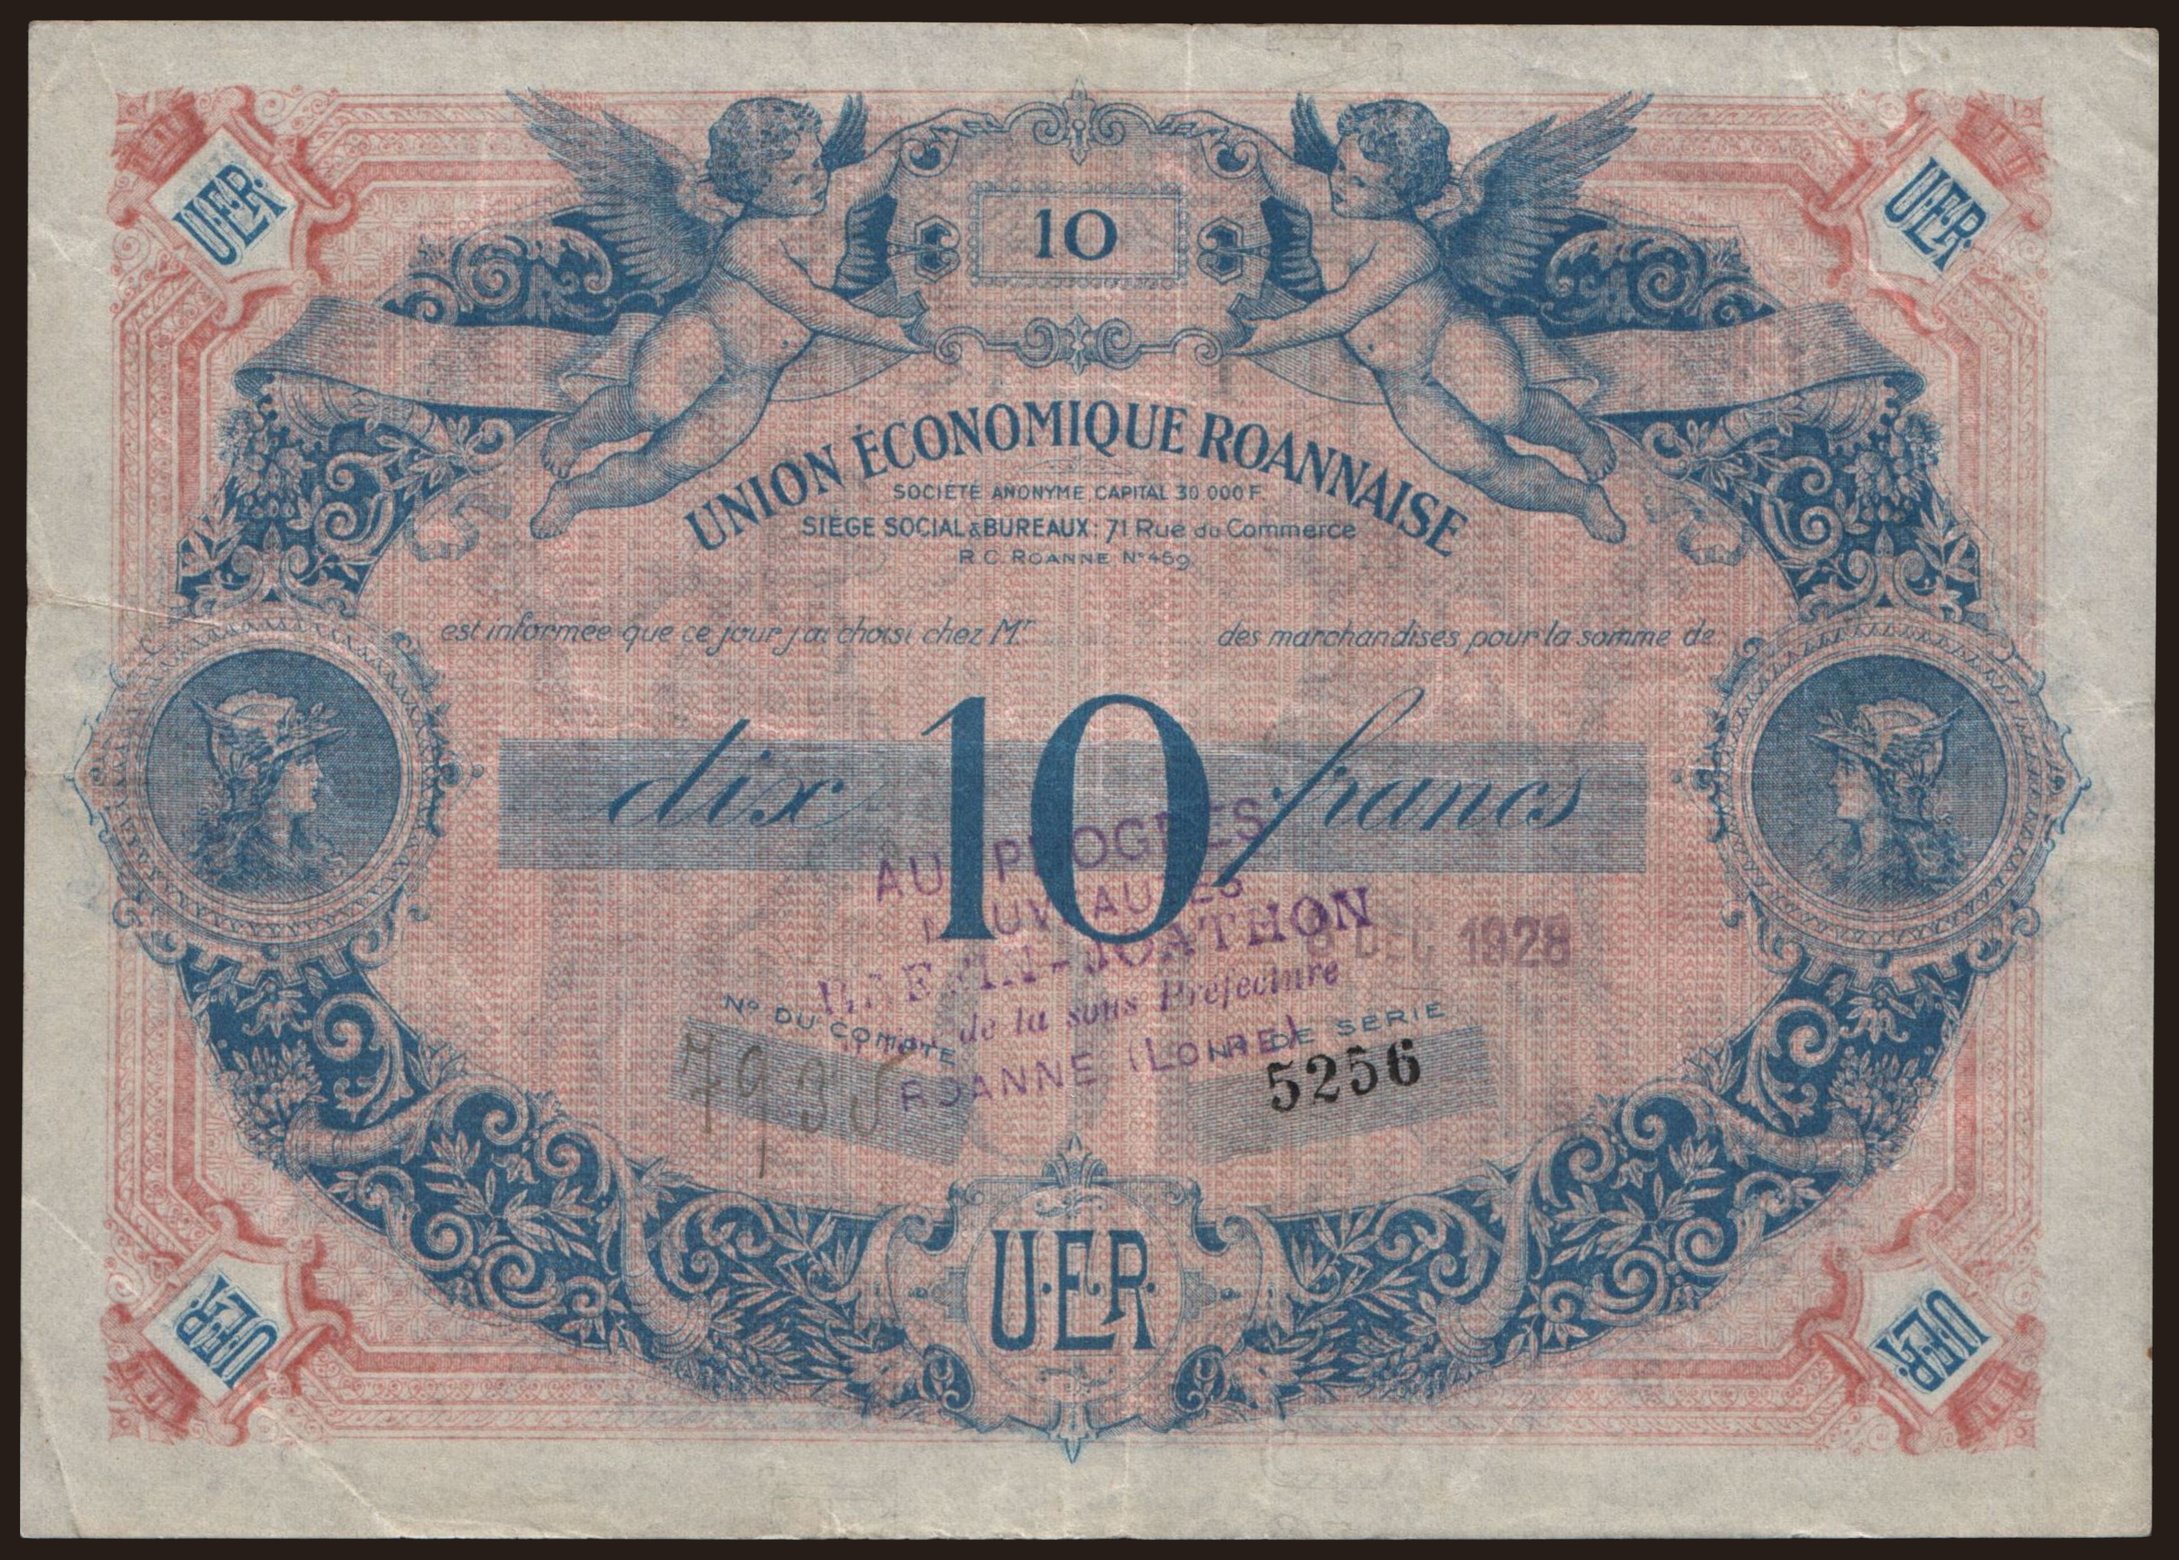 Roanne, 10 francs, 1928